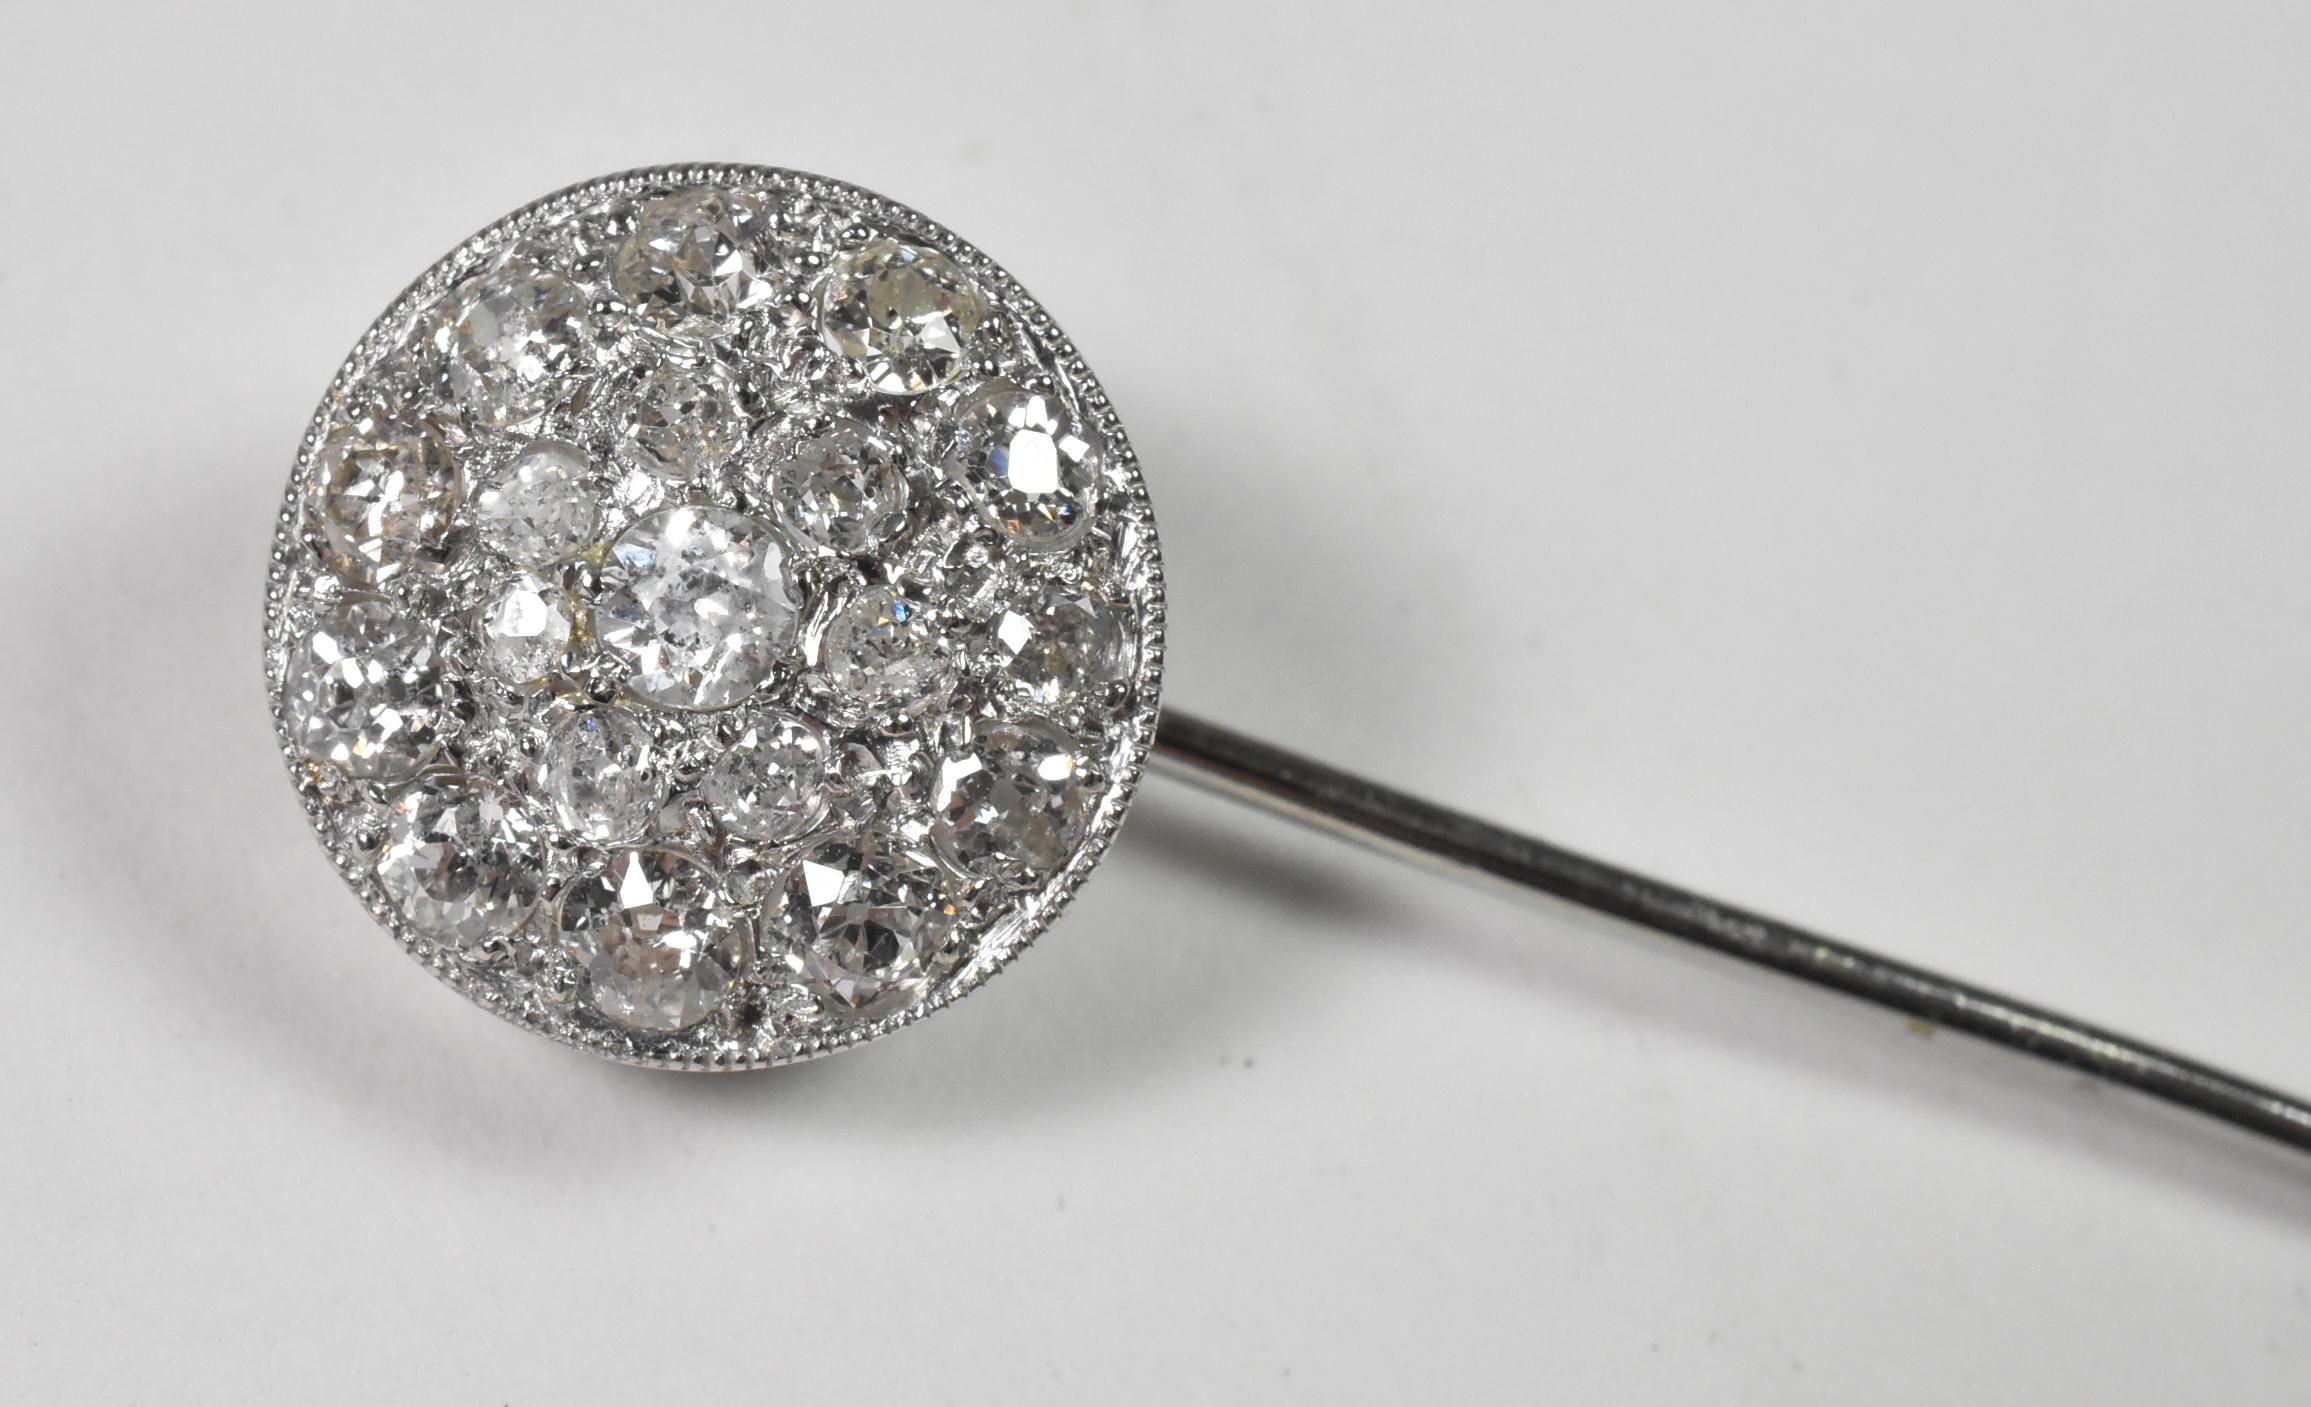 Antique 1 ct diamond stick pin. 18K white gold, tested. 19 mine cut diamonds totaling 1 ct. 2 5/8